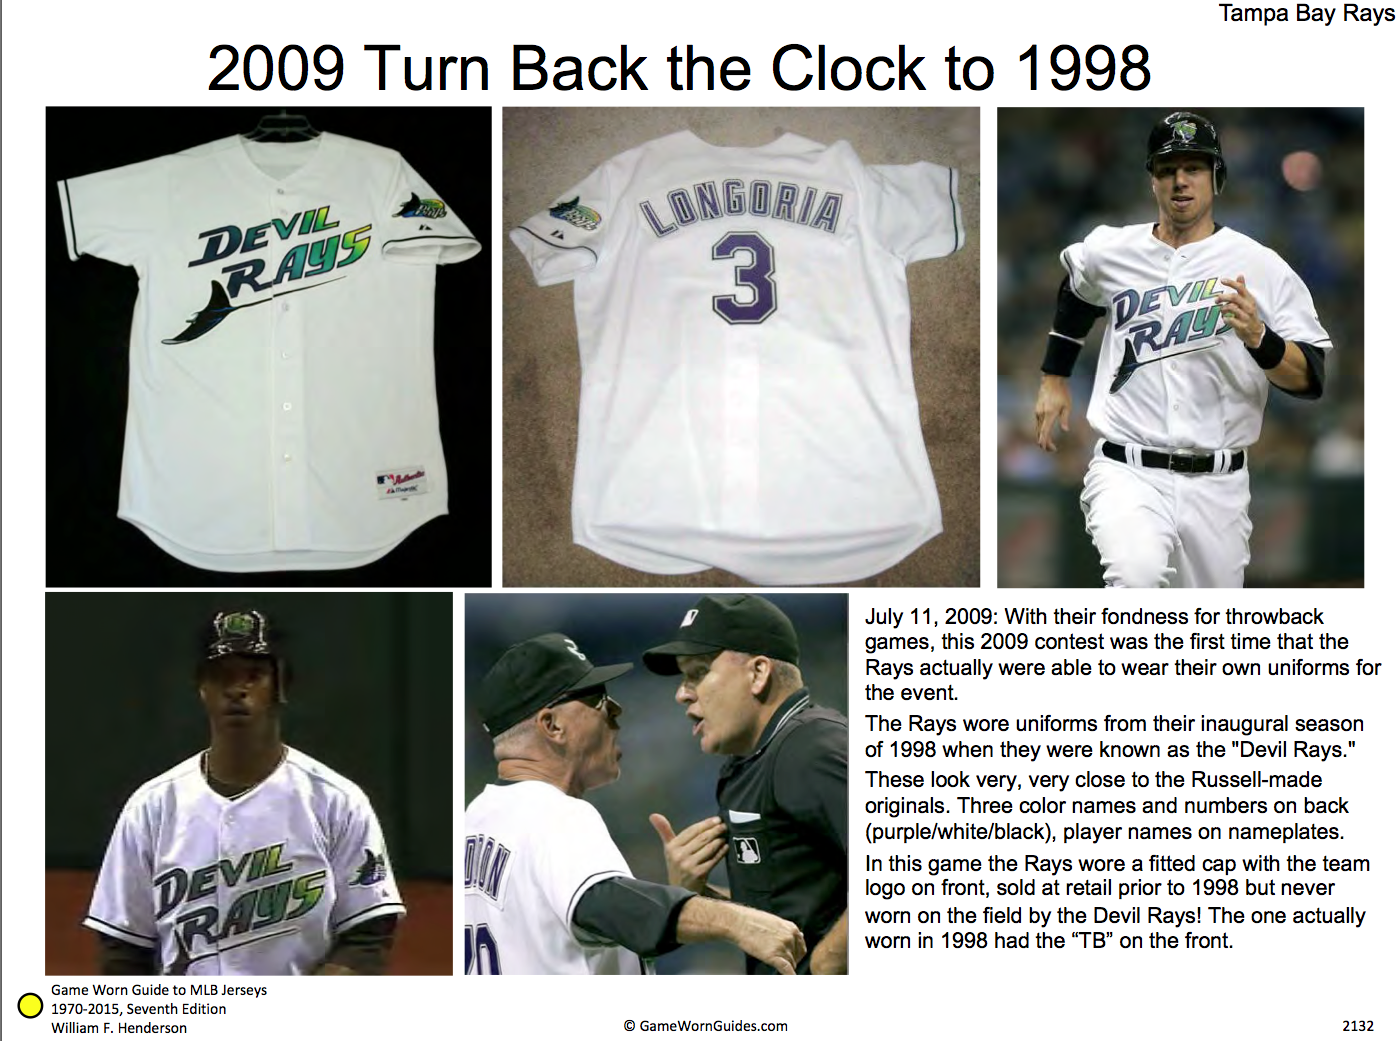 The vest era is the best era of baseball uniforms. Dare I say it is the  VEST era of baseball uniforms? : r/mlb